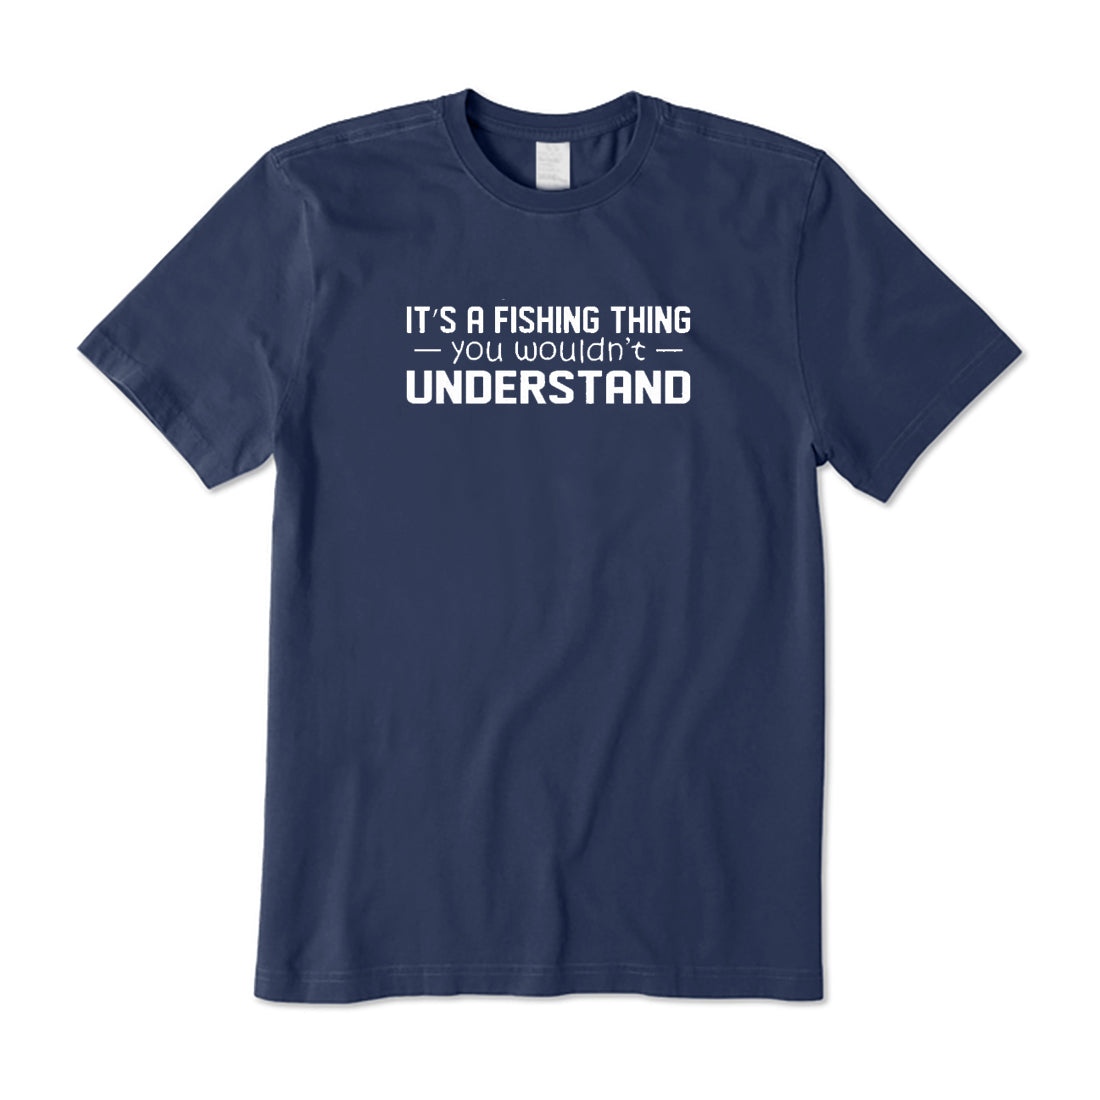 It's a fishing thing T-Shirt